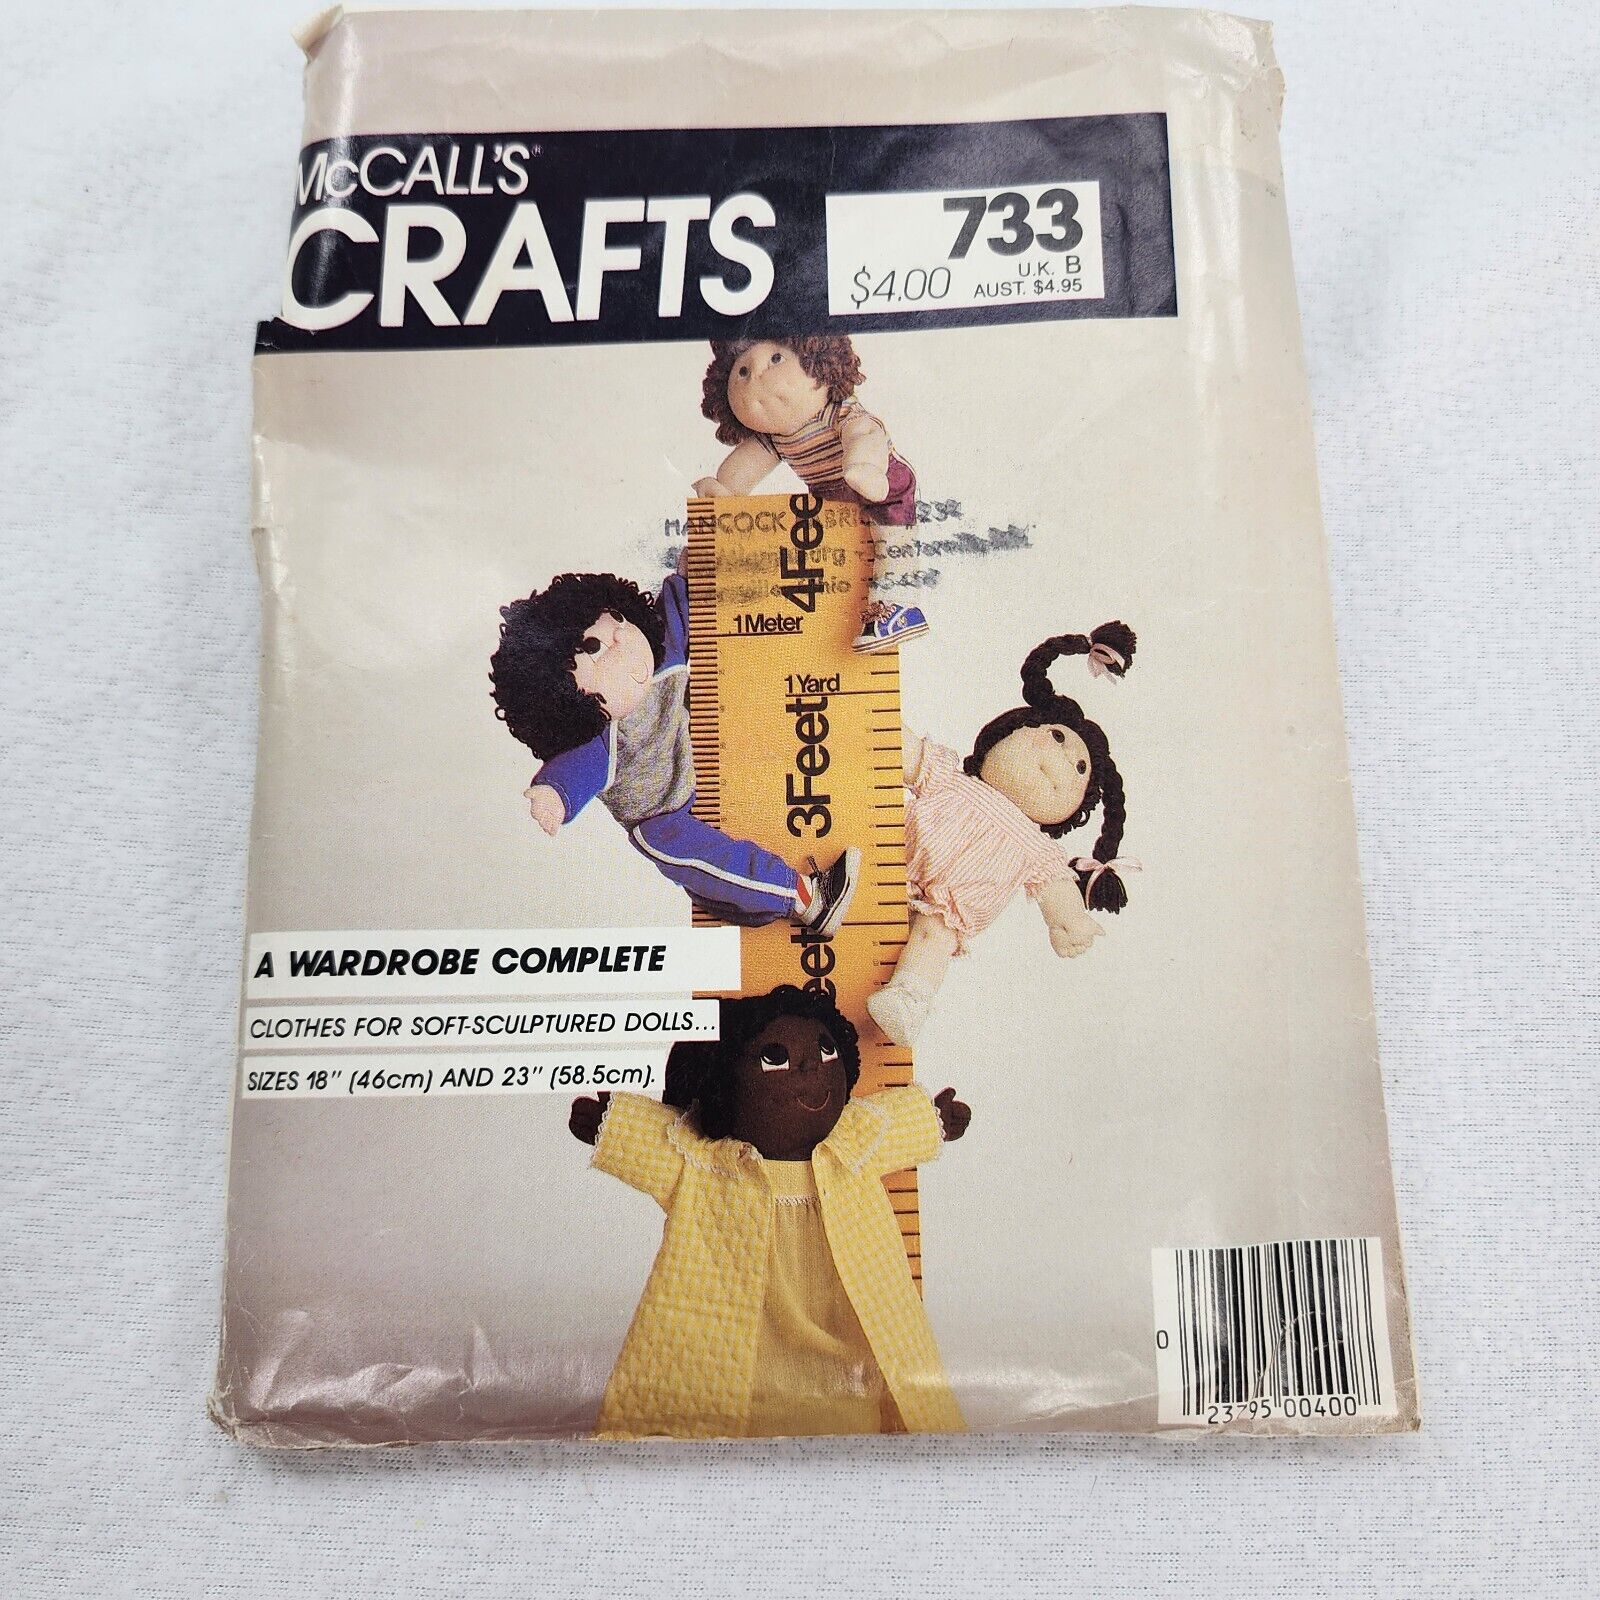 Vintage McCall's Crafts #733 - 18